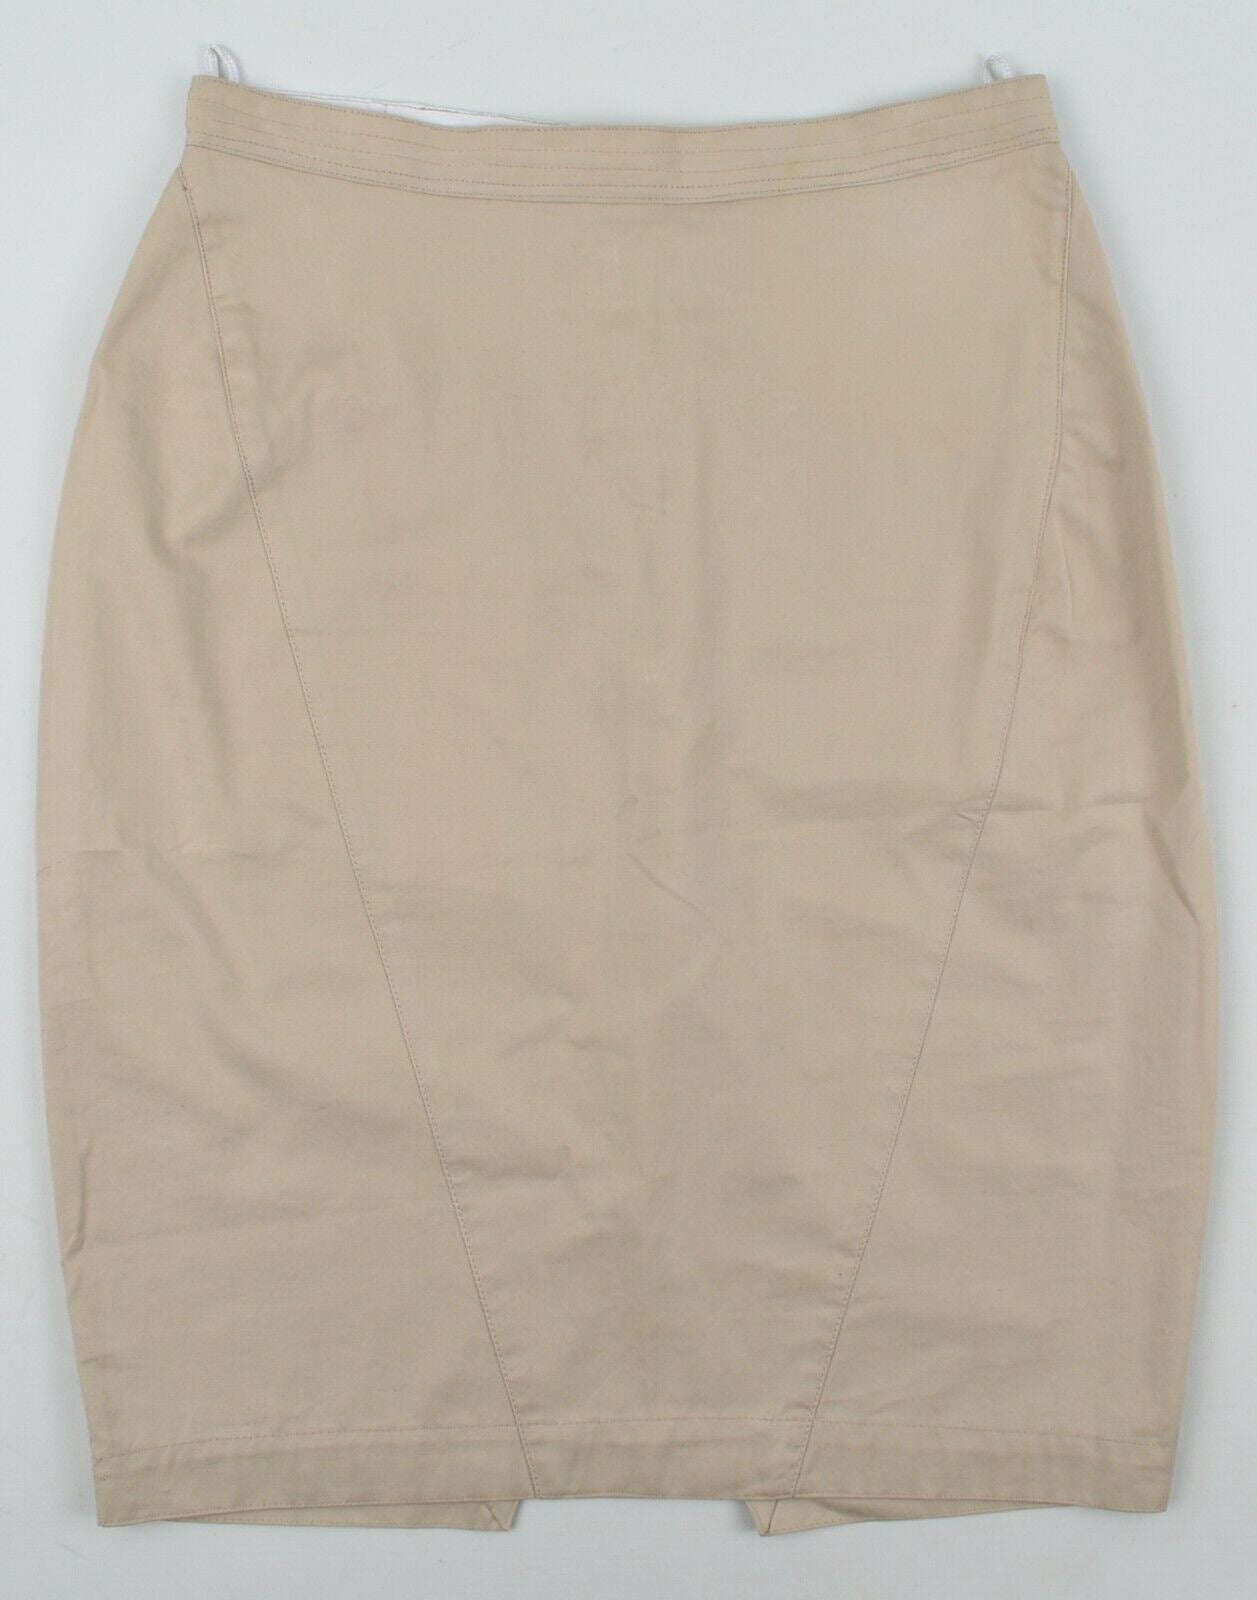 MARNI Women's Beige Lightweight Cotton Skirt, size UK 8 / IT 40